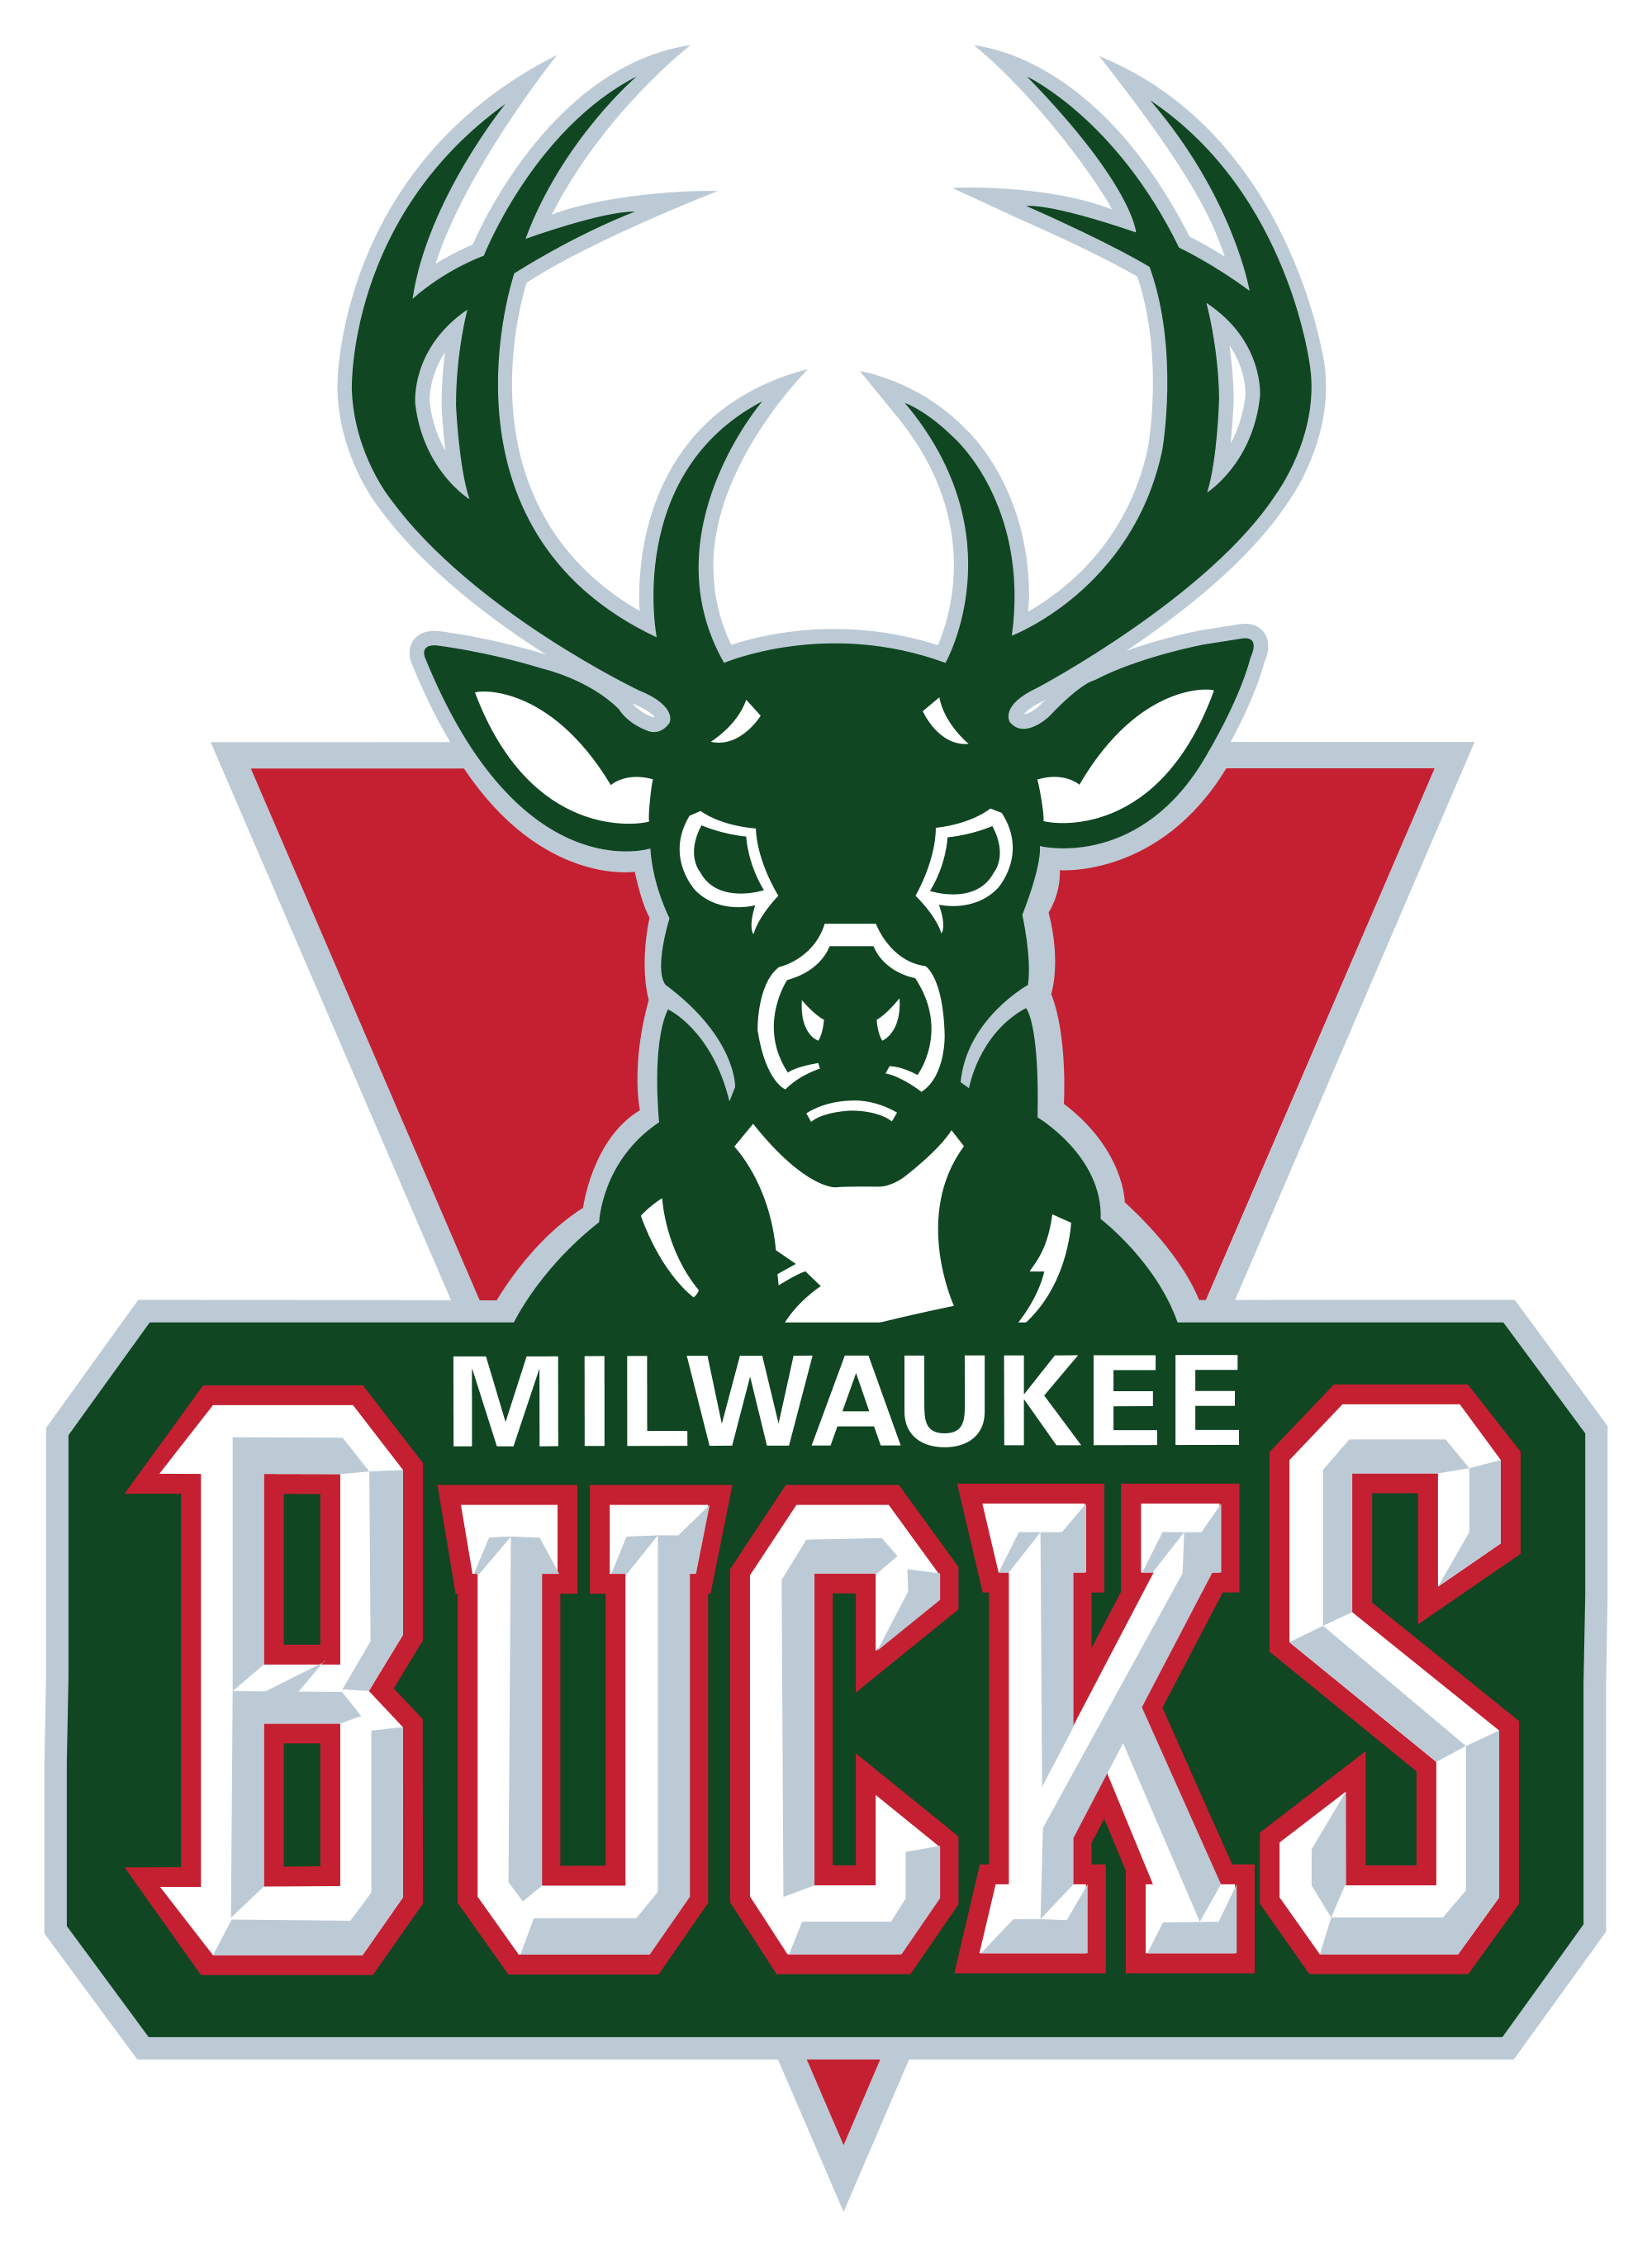 Milwaukee Bucks logo. Hopefully Jabari Parker will help revive